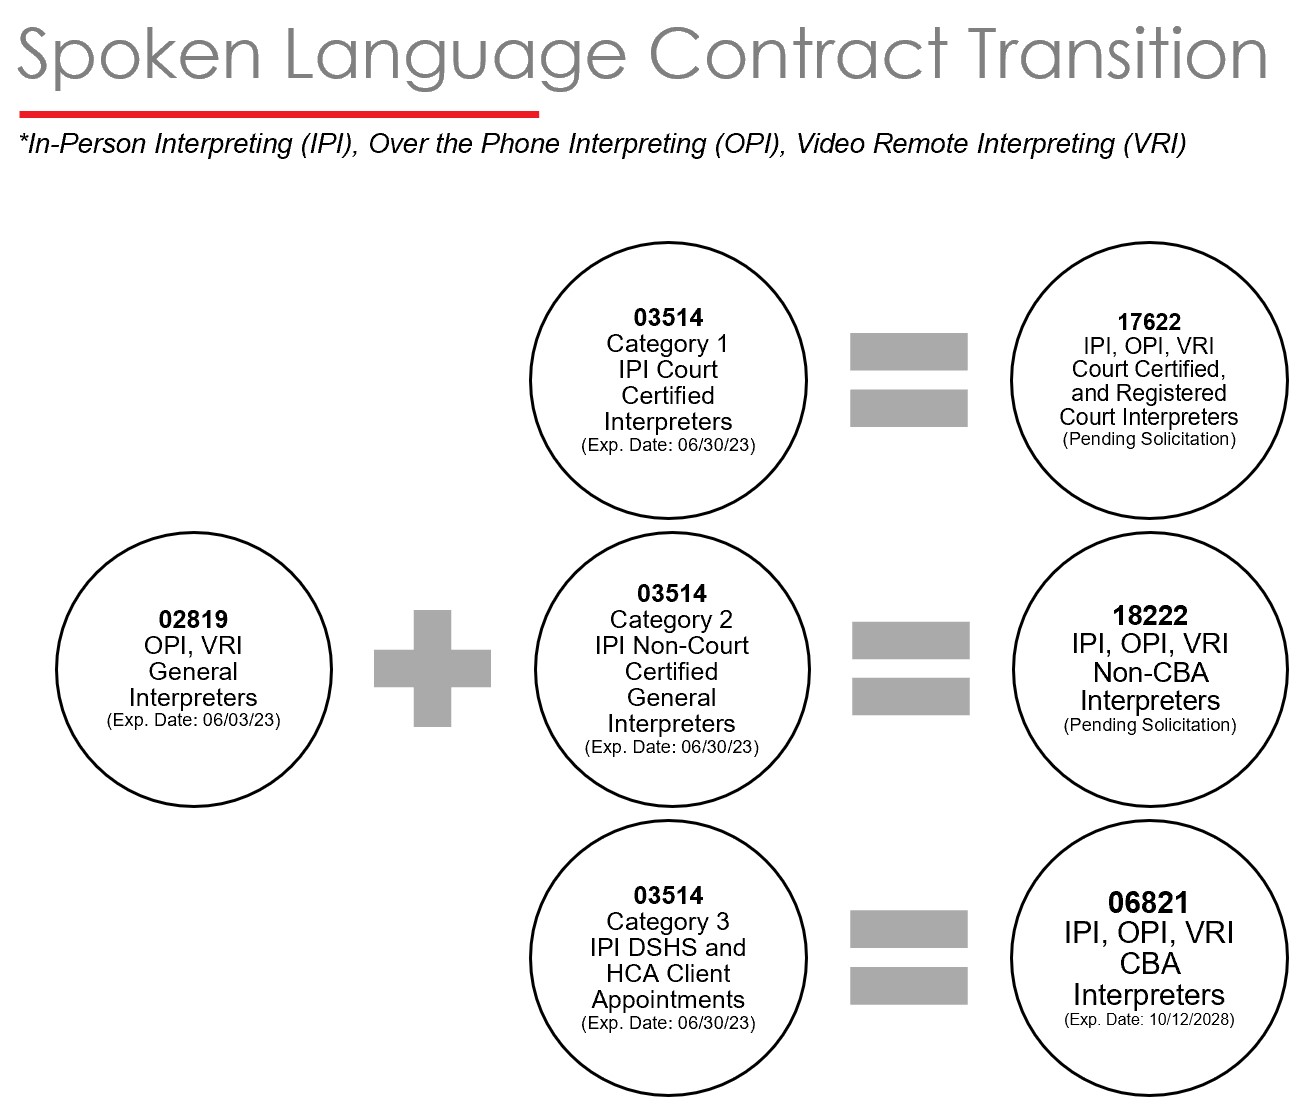 Spoken Language Contract Transition